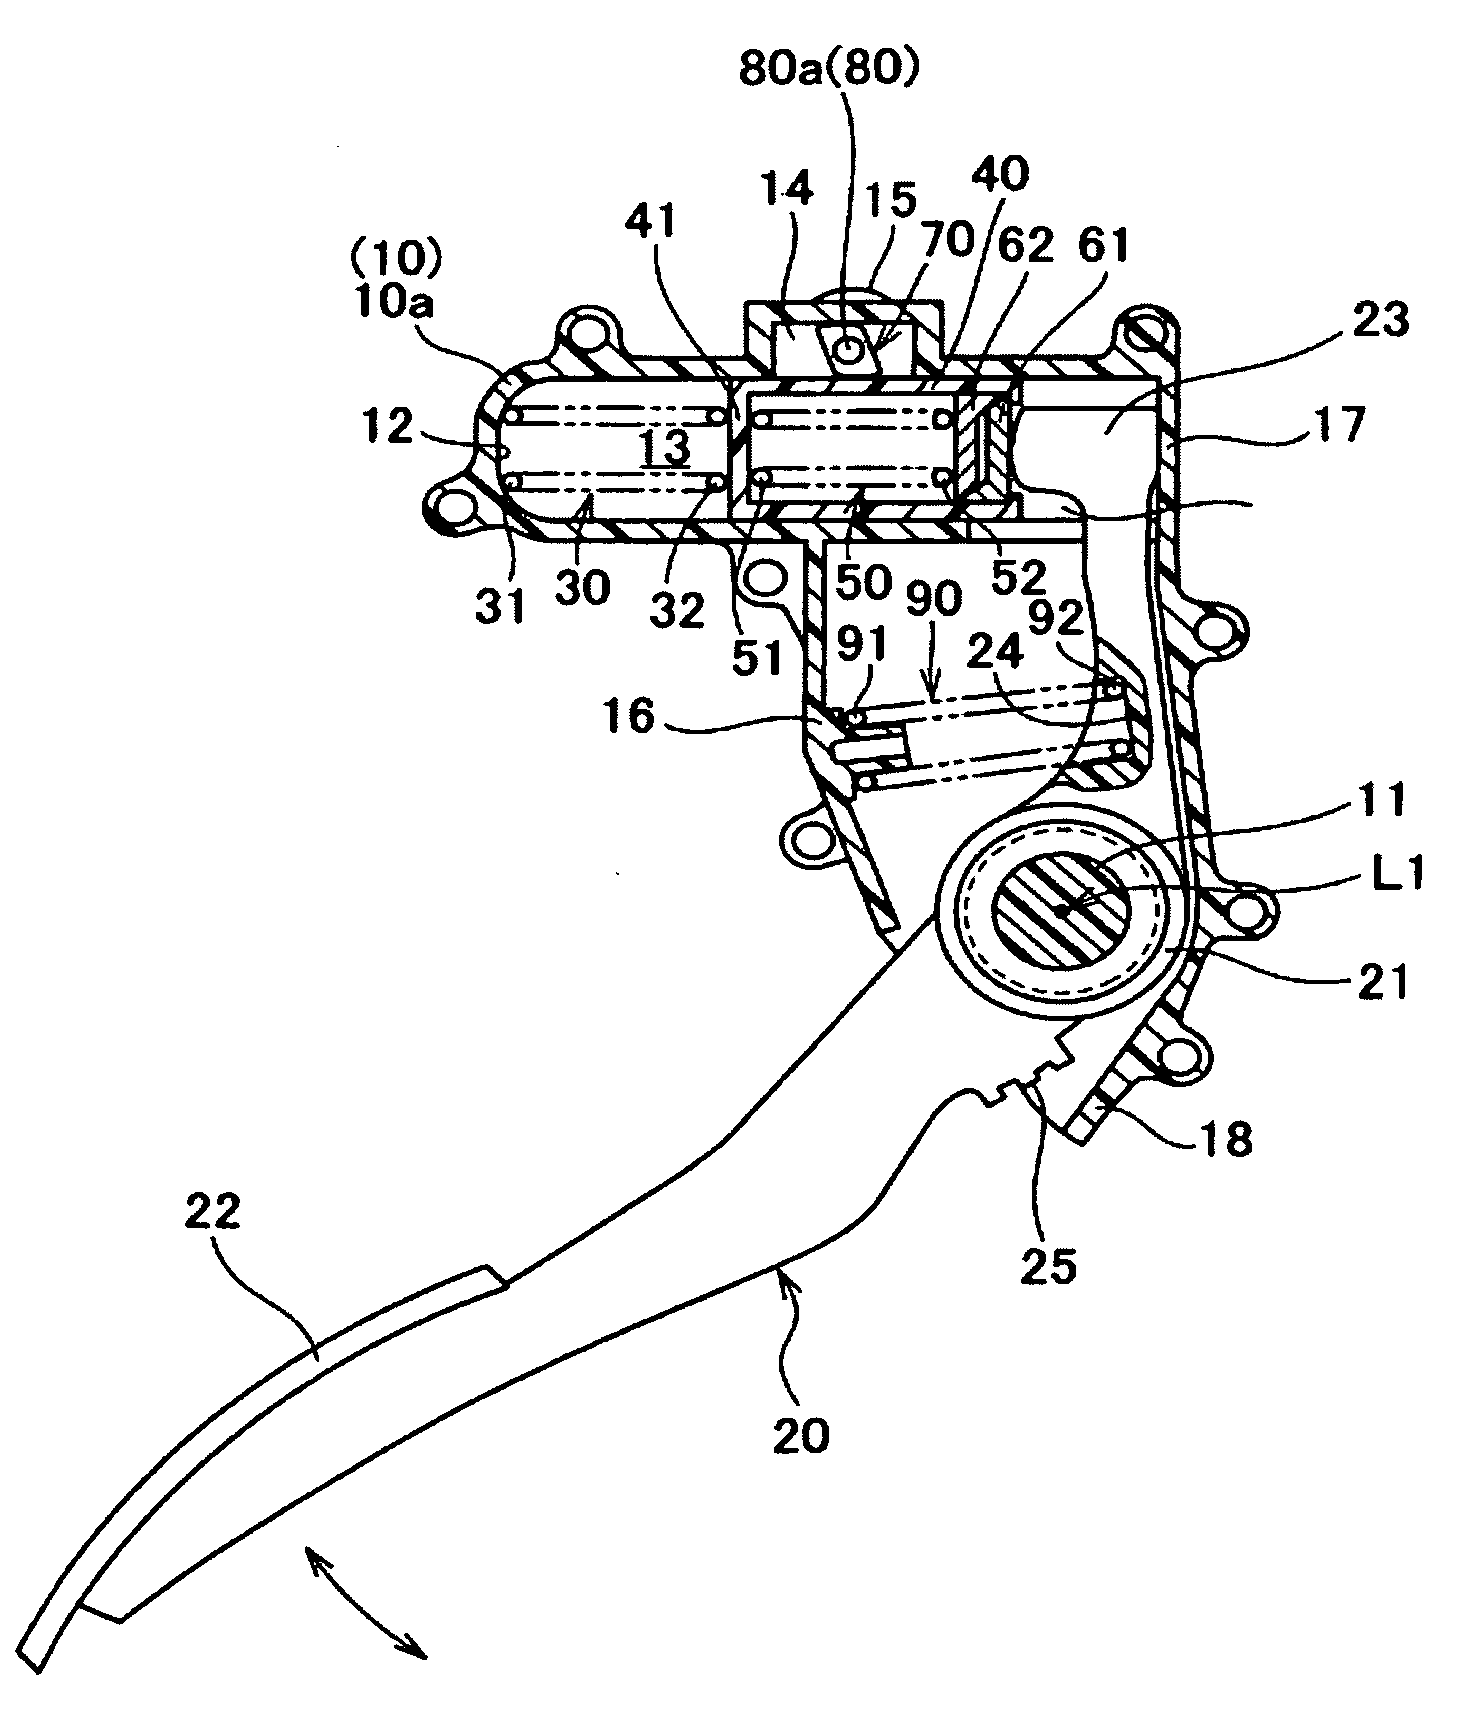 Accelerator pedal apparatus